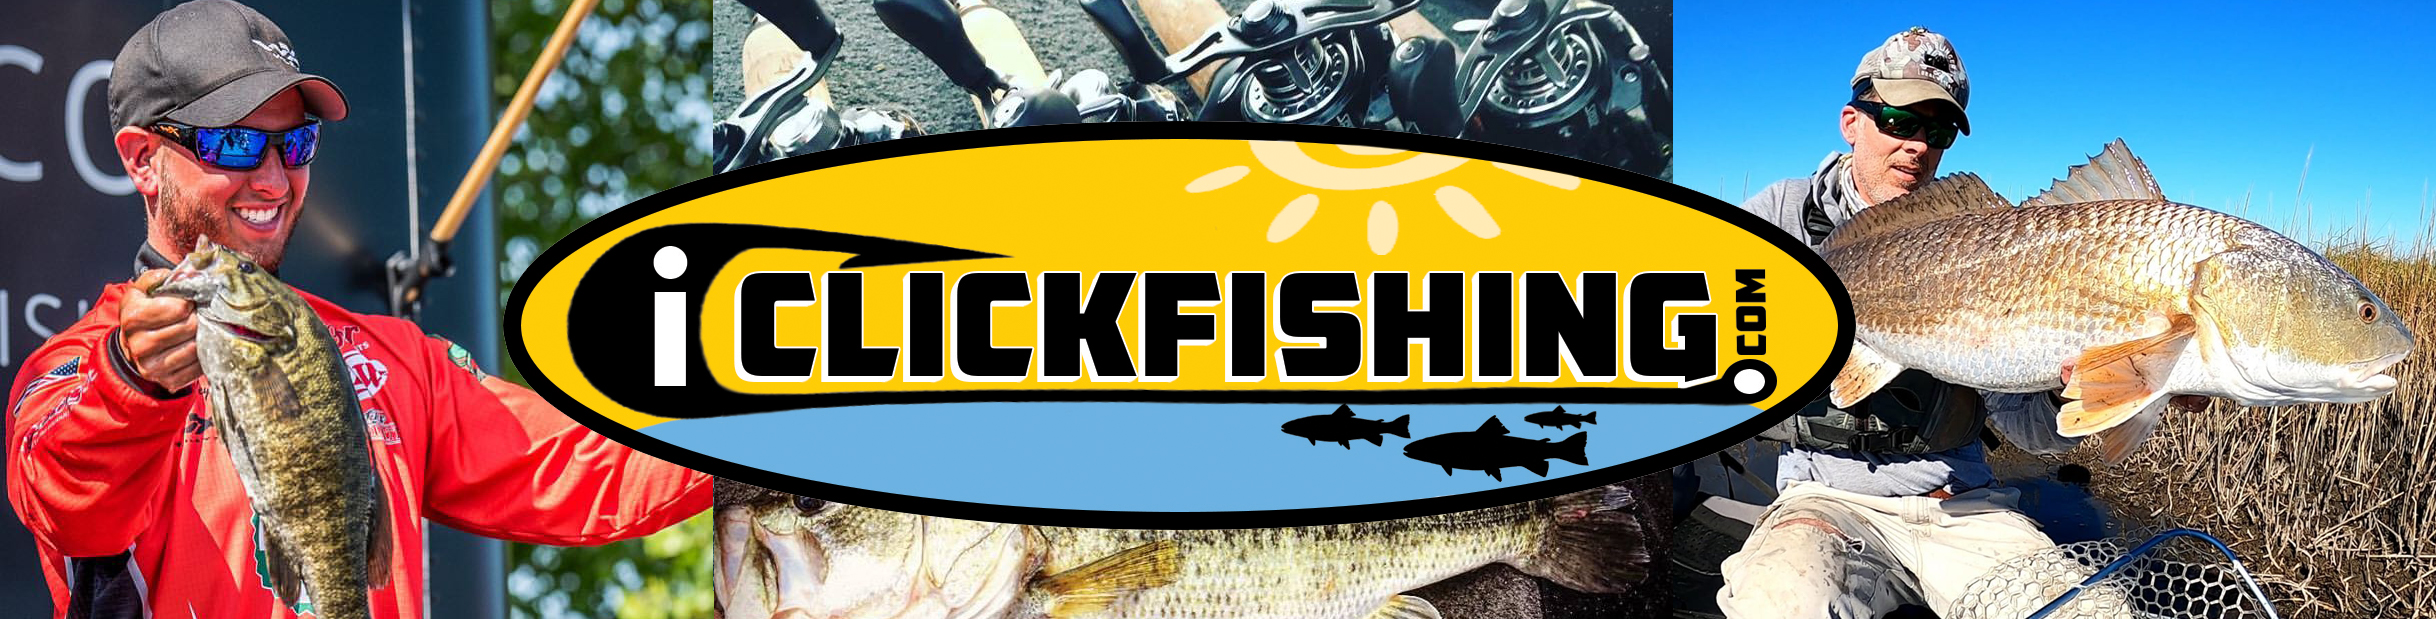 Fishing Directory and Fishing Website – iClickFishing.com